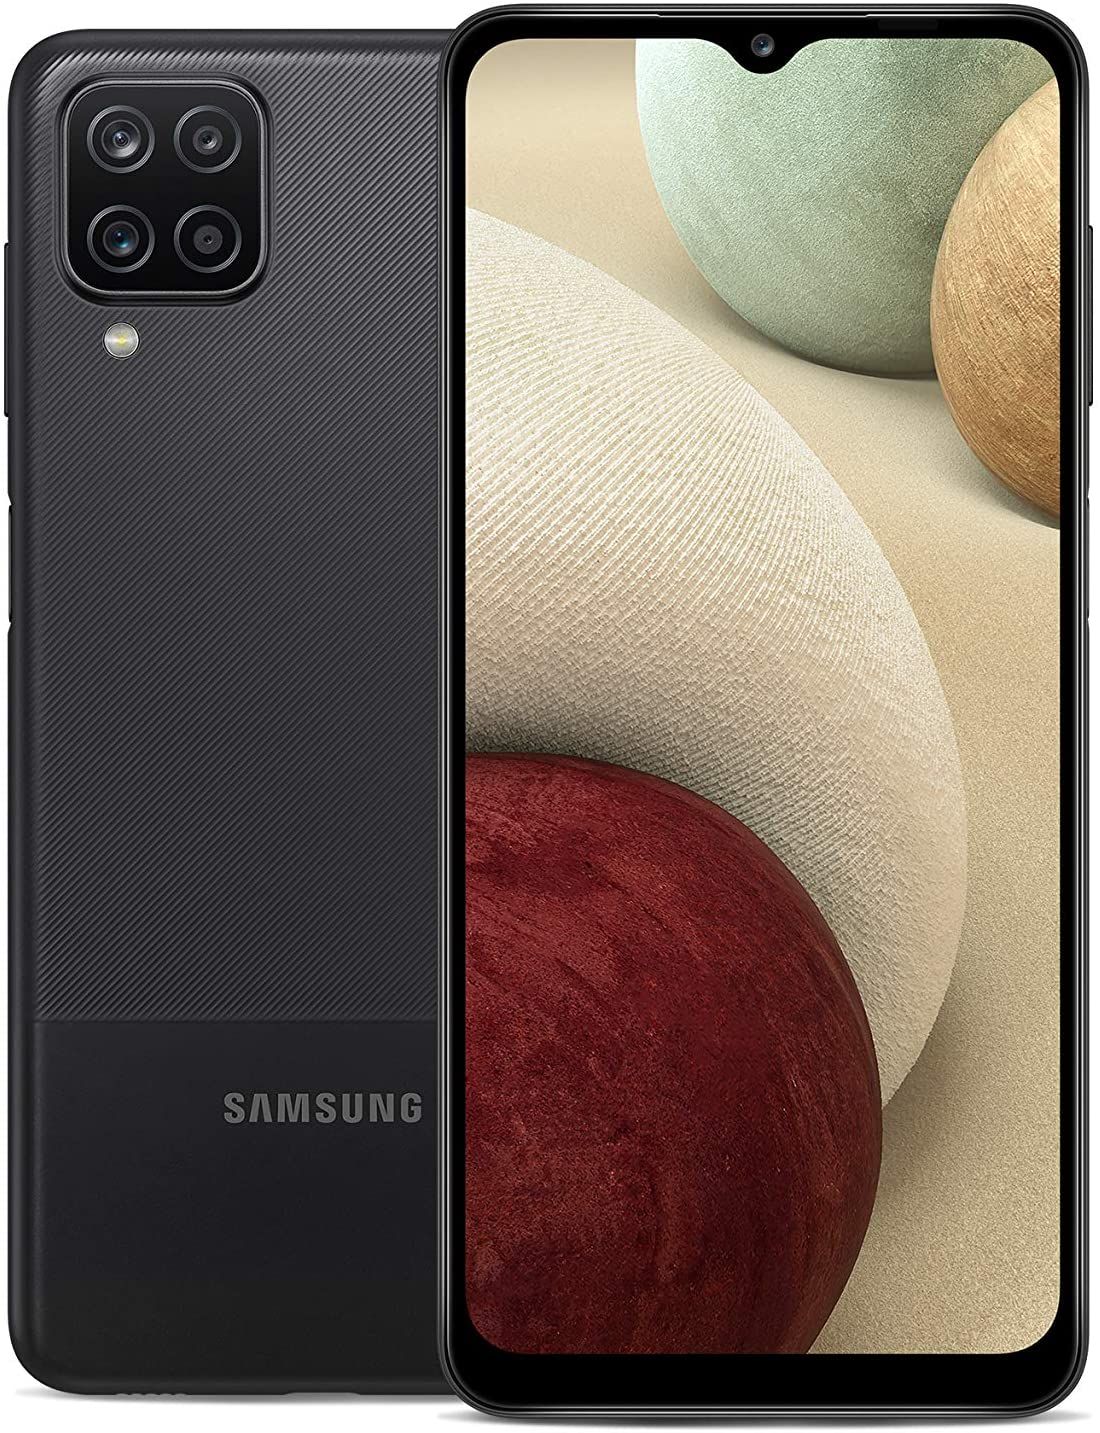 Samsung Galaxy S21 Ultra 5G G9980 256GB 12GB RAM Factory Unlocked  International Version - Phantom Black : Cell Phones & Accessories 